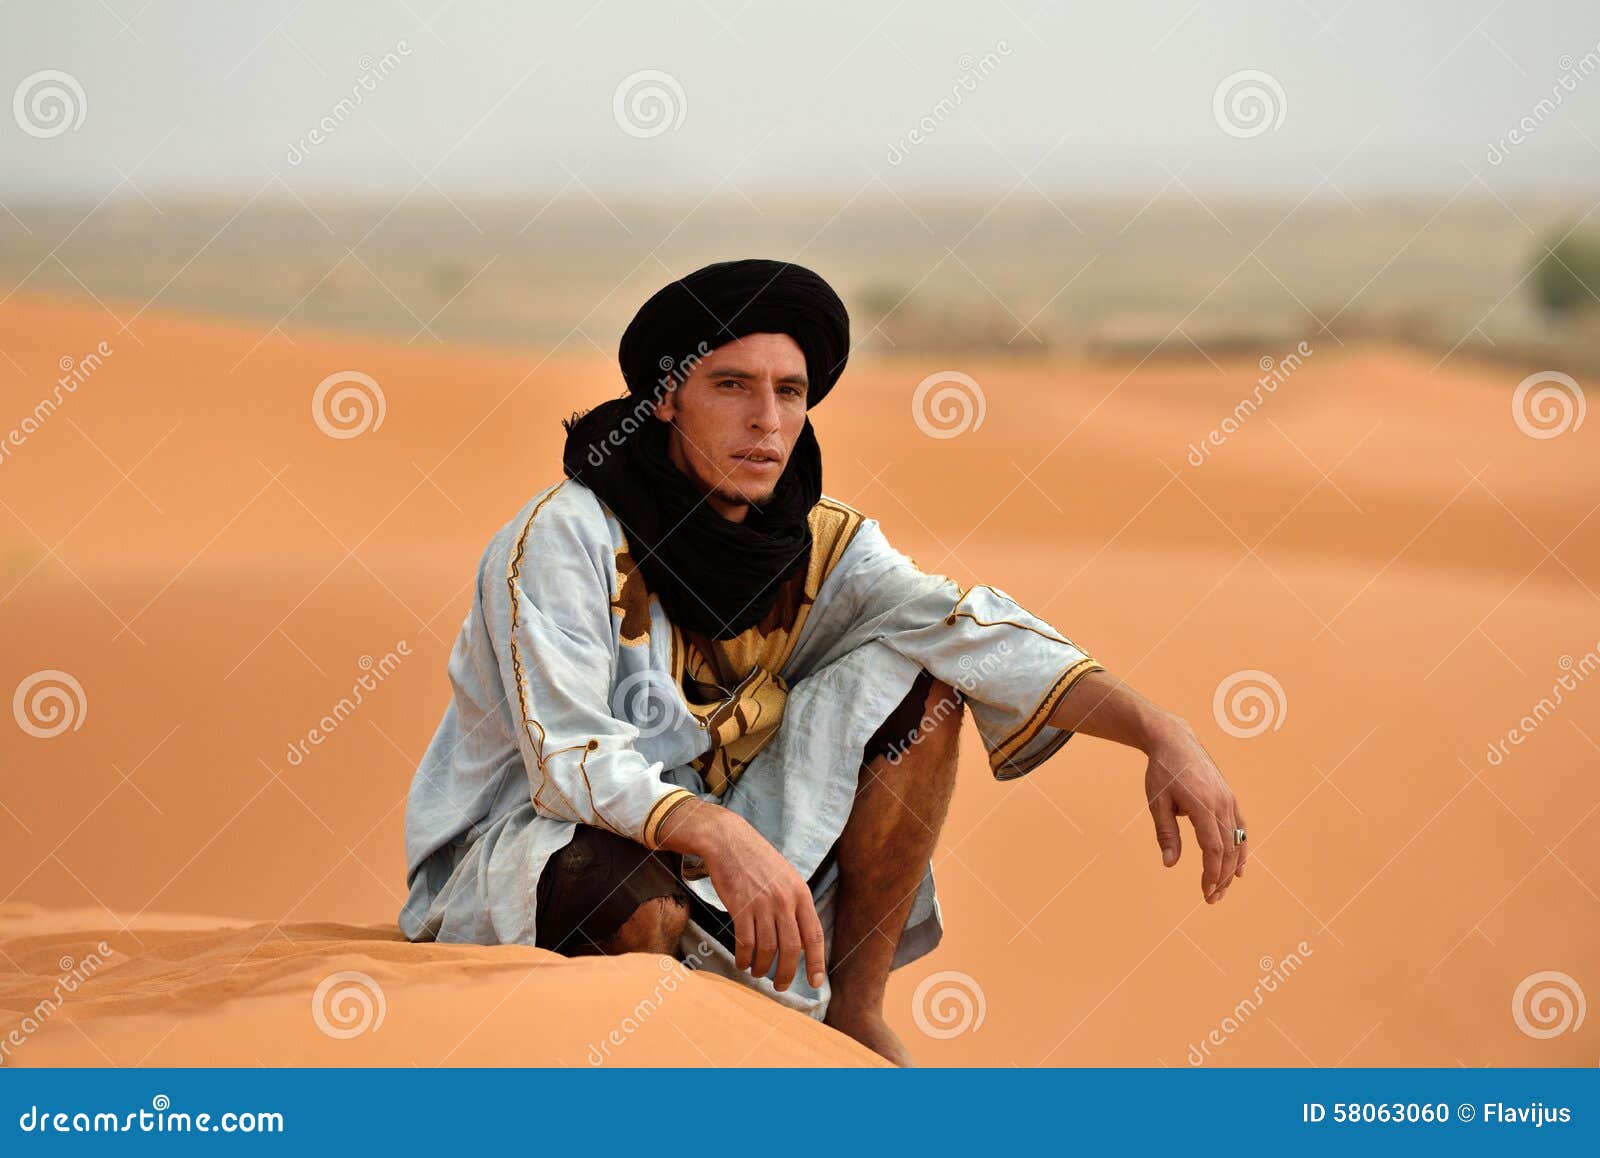 Bedouin Man Wears Traditional Clothing In Sahara Desert 